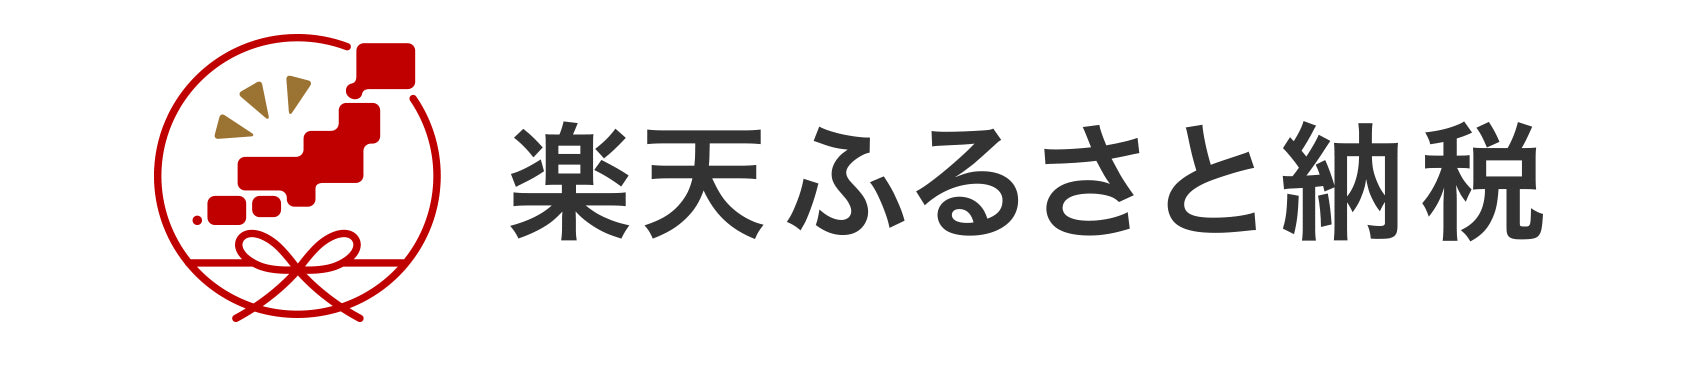 rakutenfurusato_logo